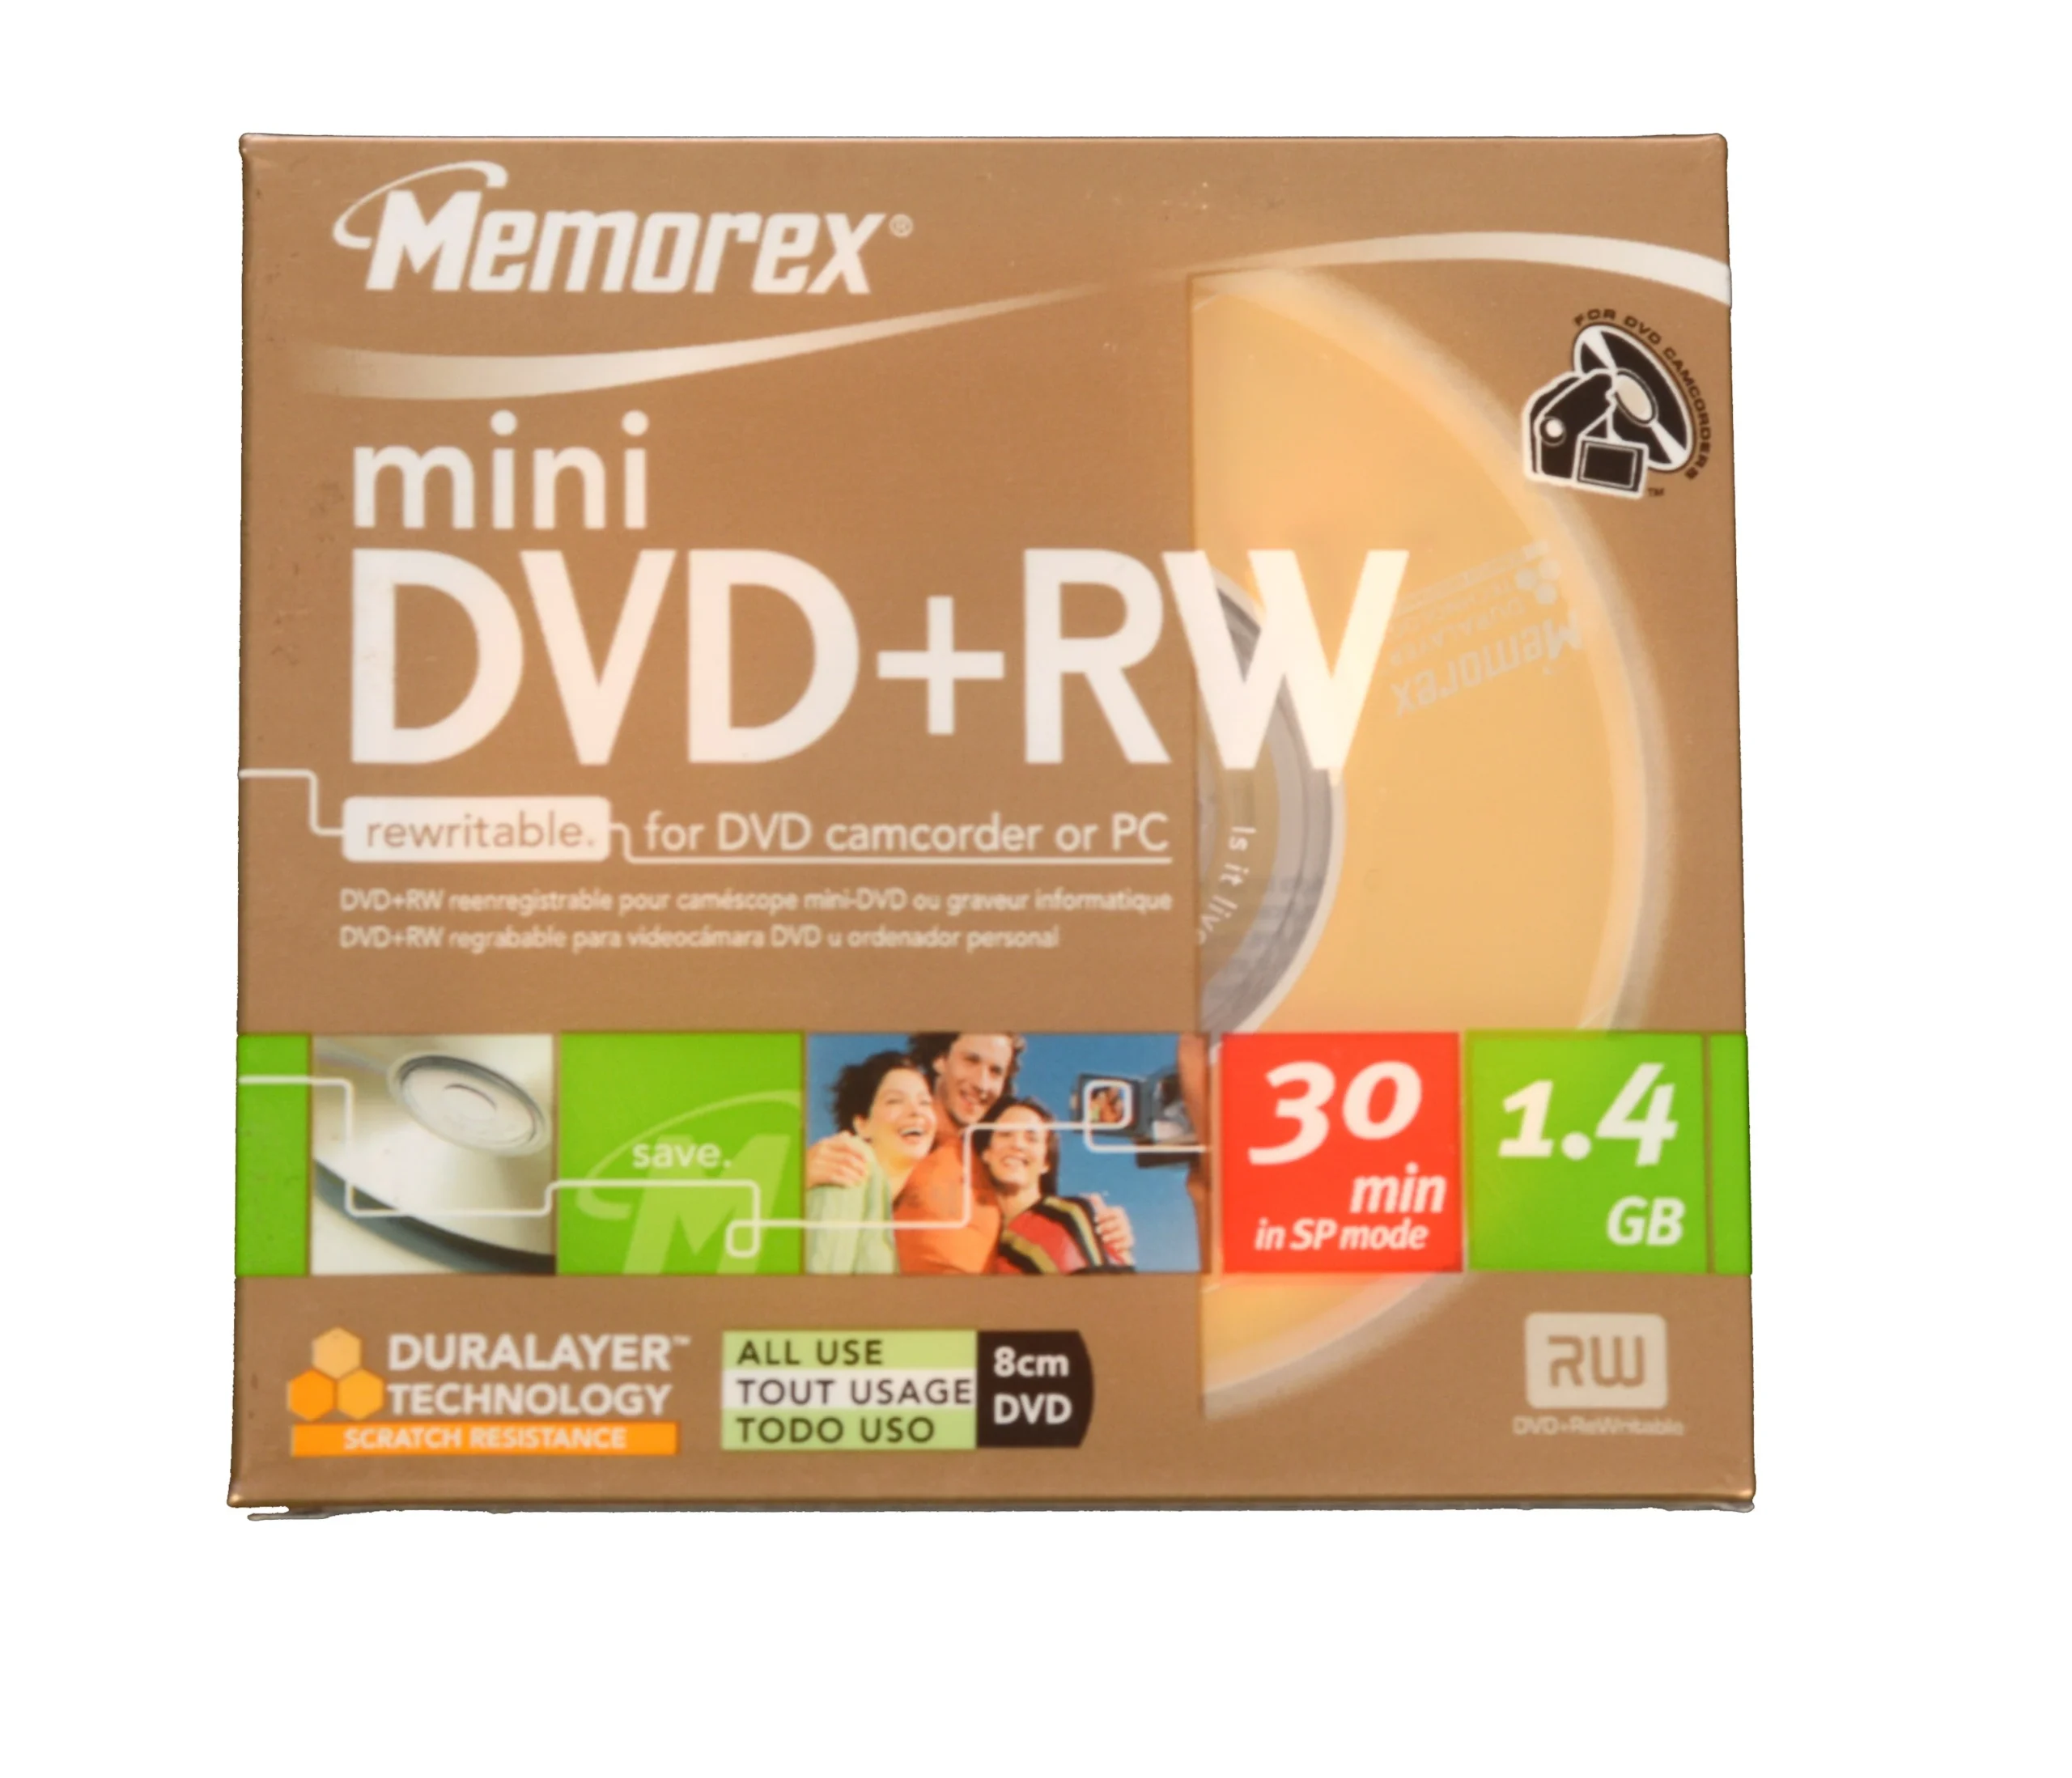 mini-dvd-rw-memorex-fotokotti